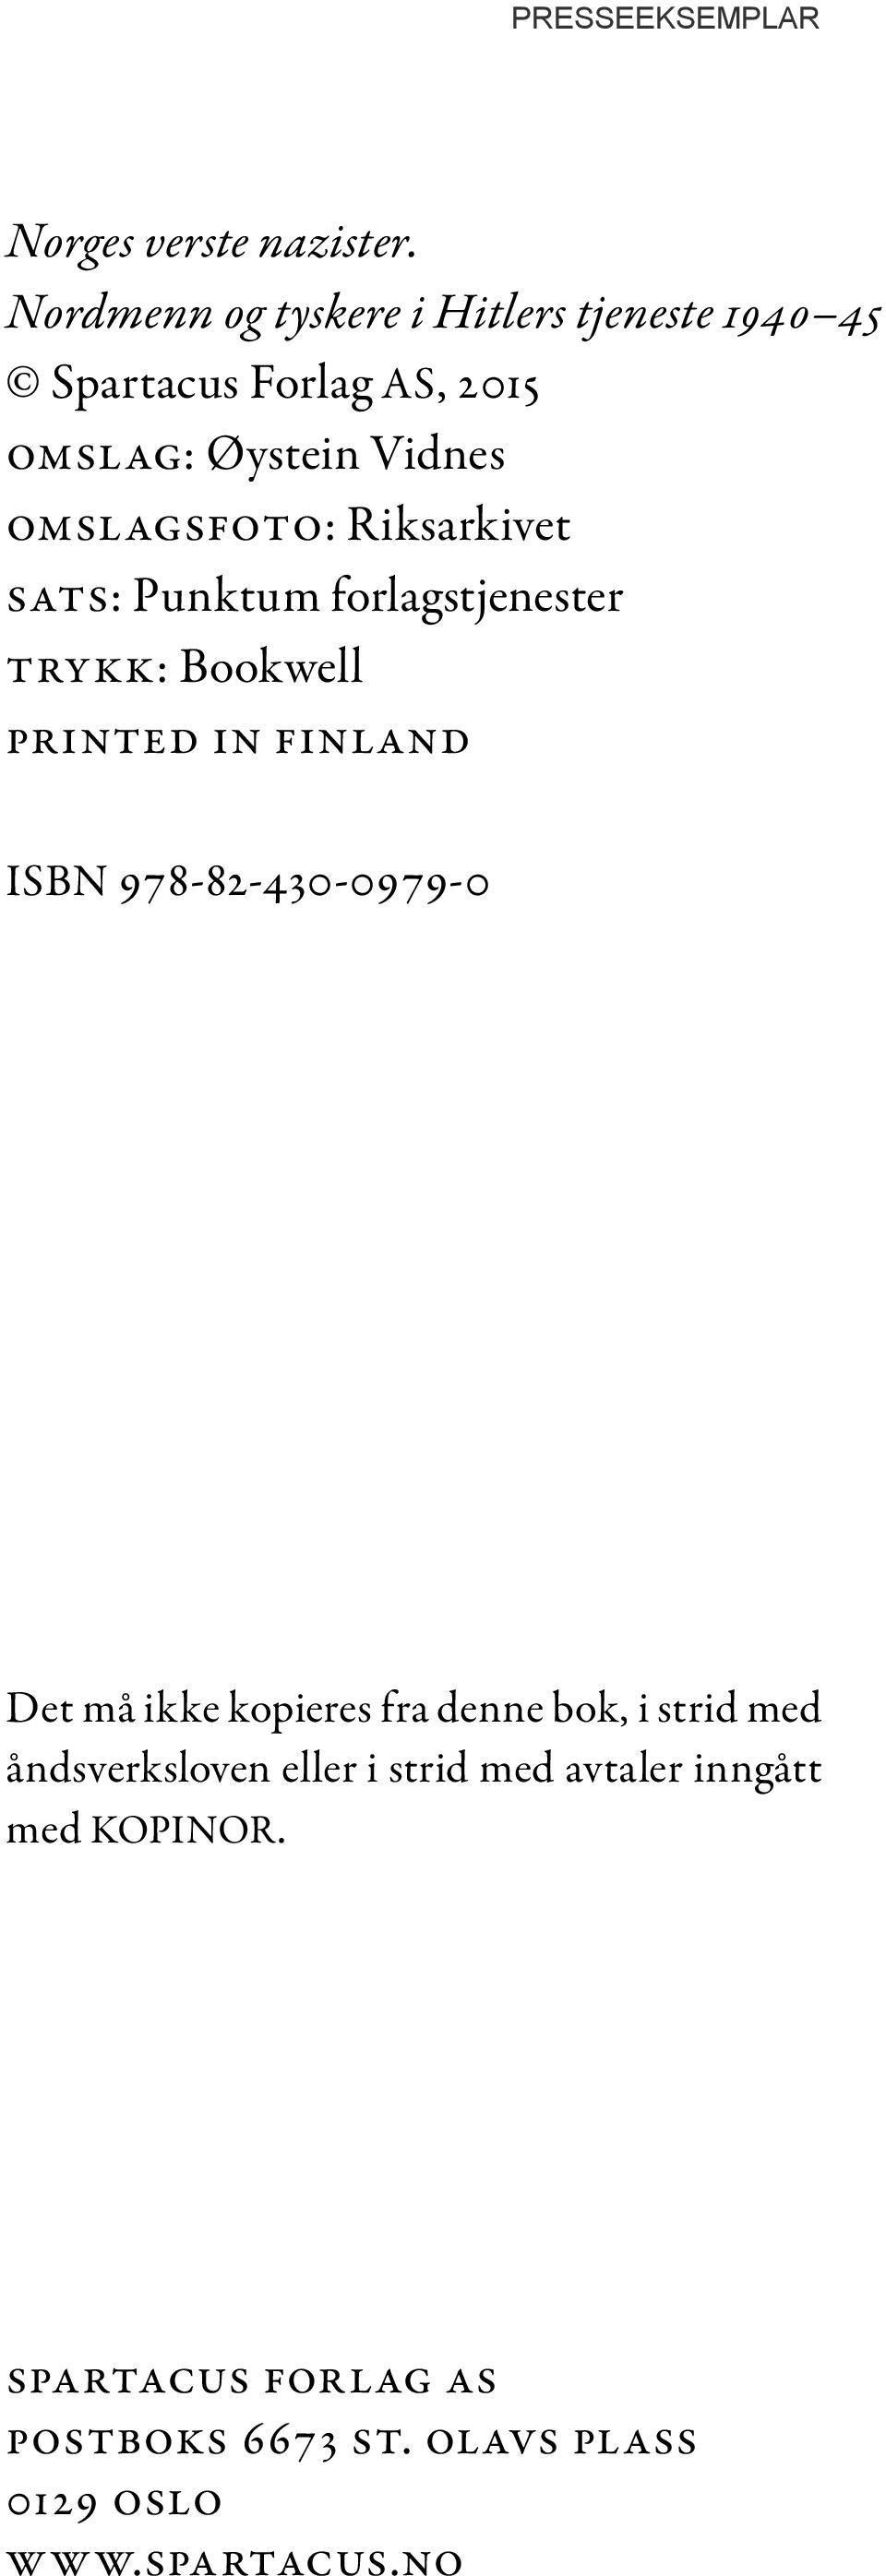 Omslagsfoto: Riksarkivet Sats: Punktum forlagstjenester Trykk: Bookwell Printed in Finland ISBN